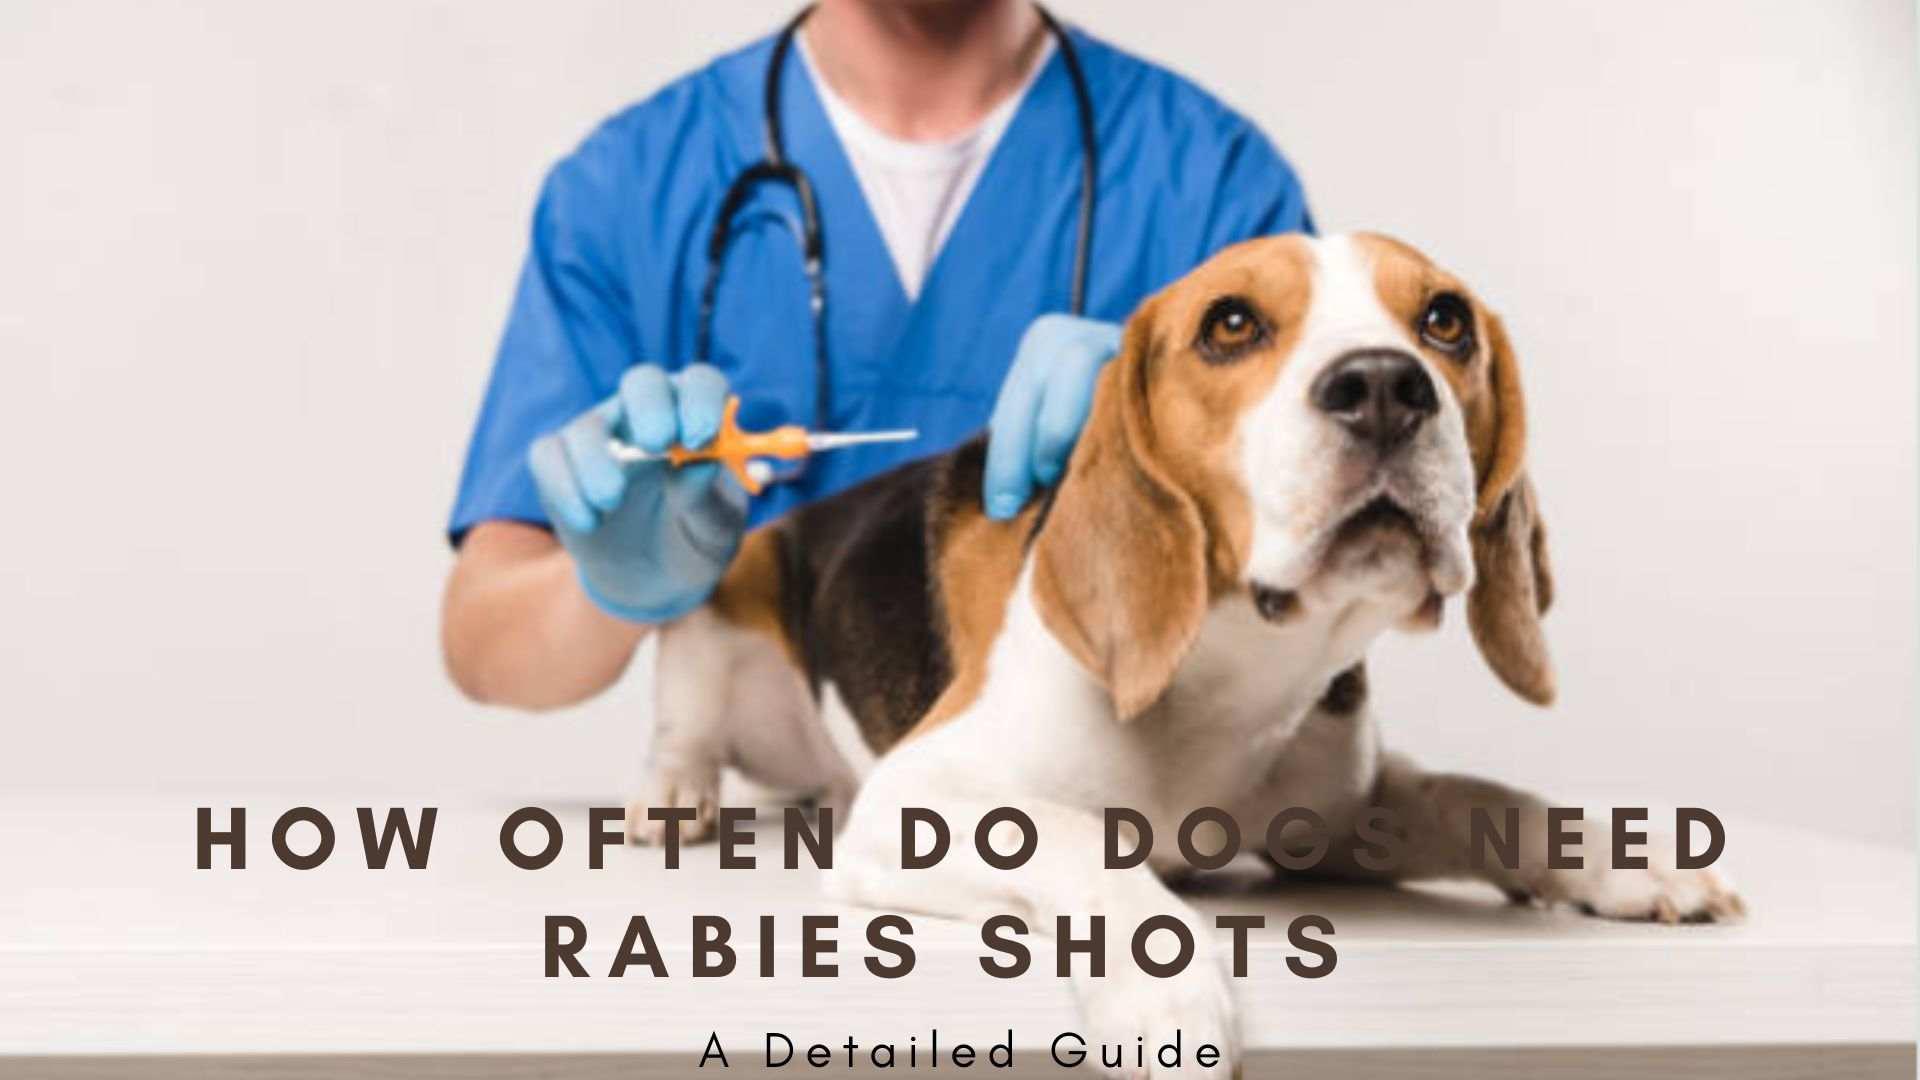 How often do dogs need rabies shots